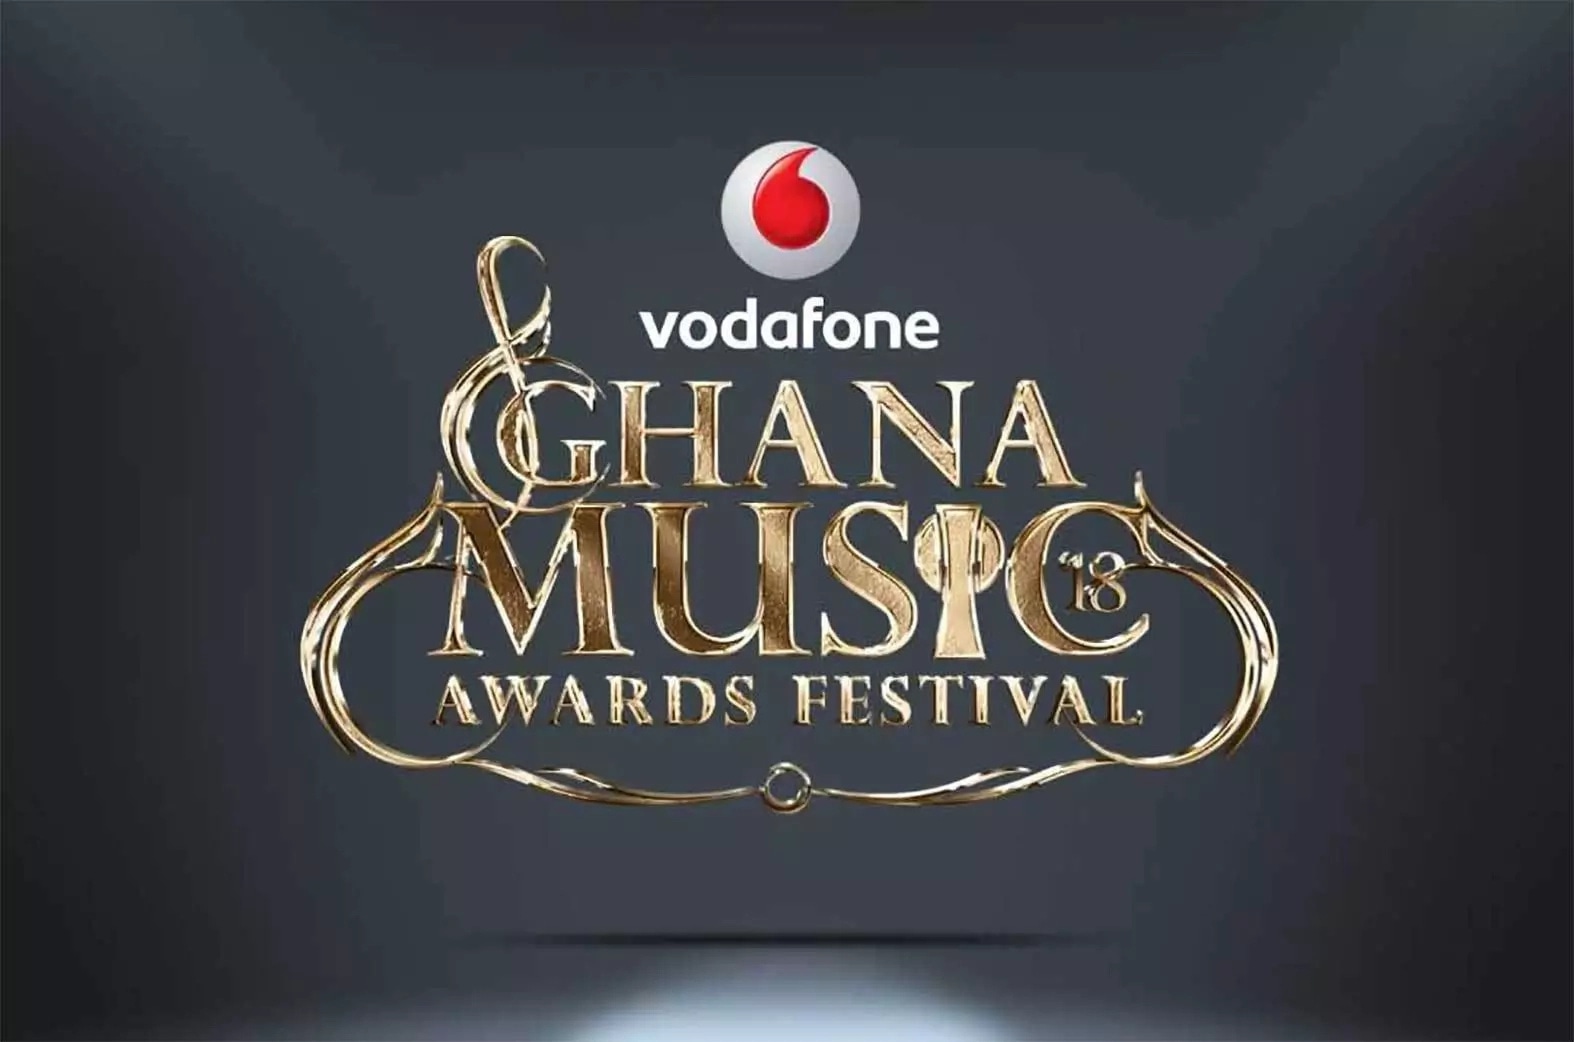 Ghana music awards 2018 winners, Ghana music awards UK, Ghana music awards UK 2018